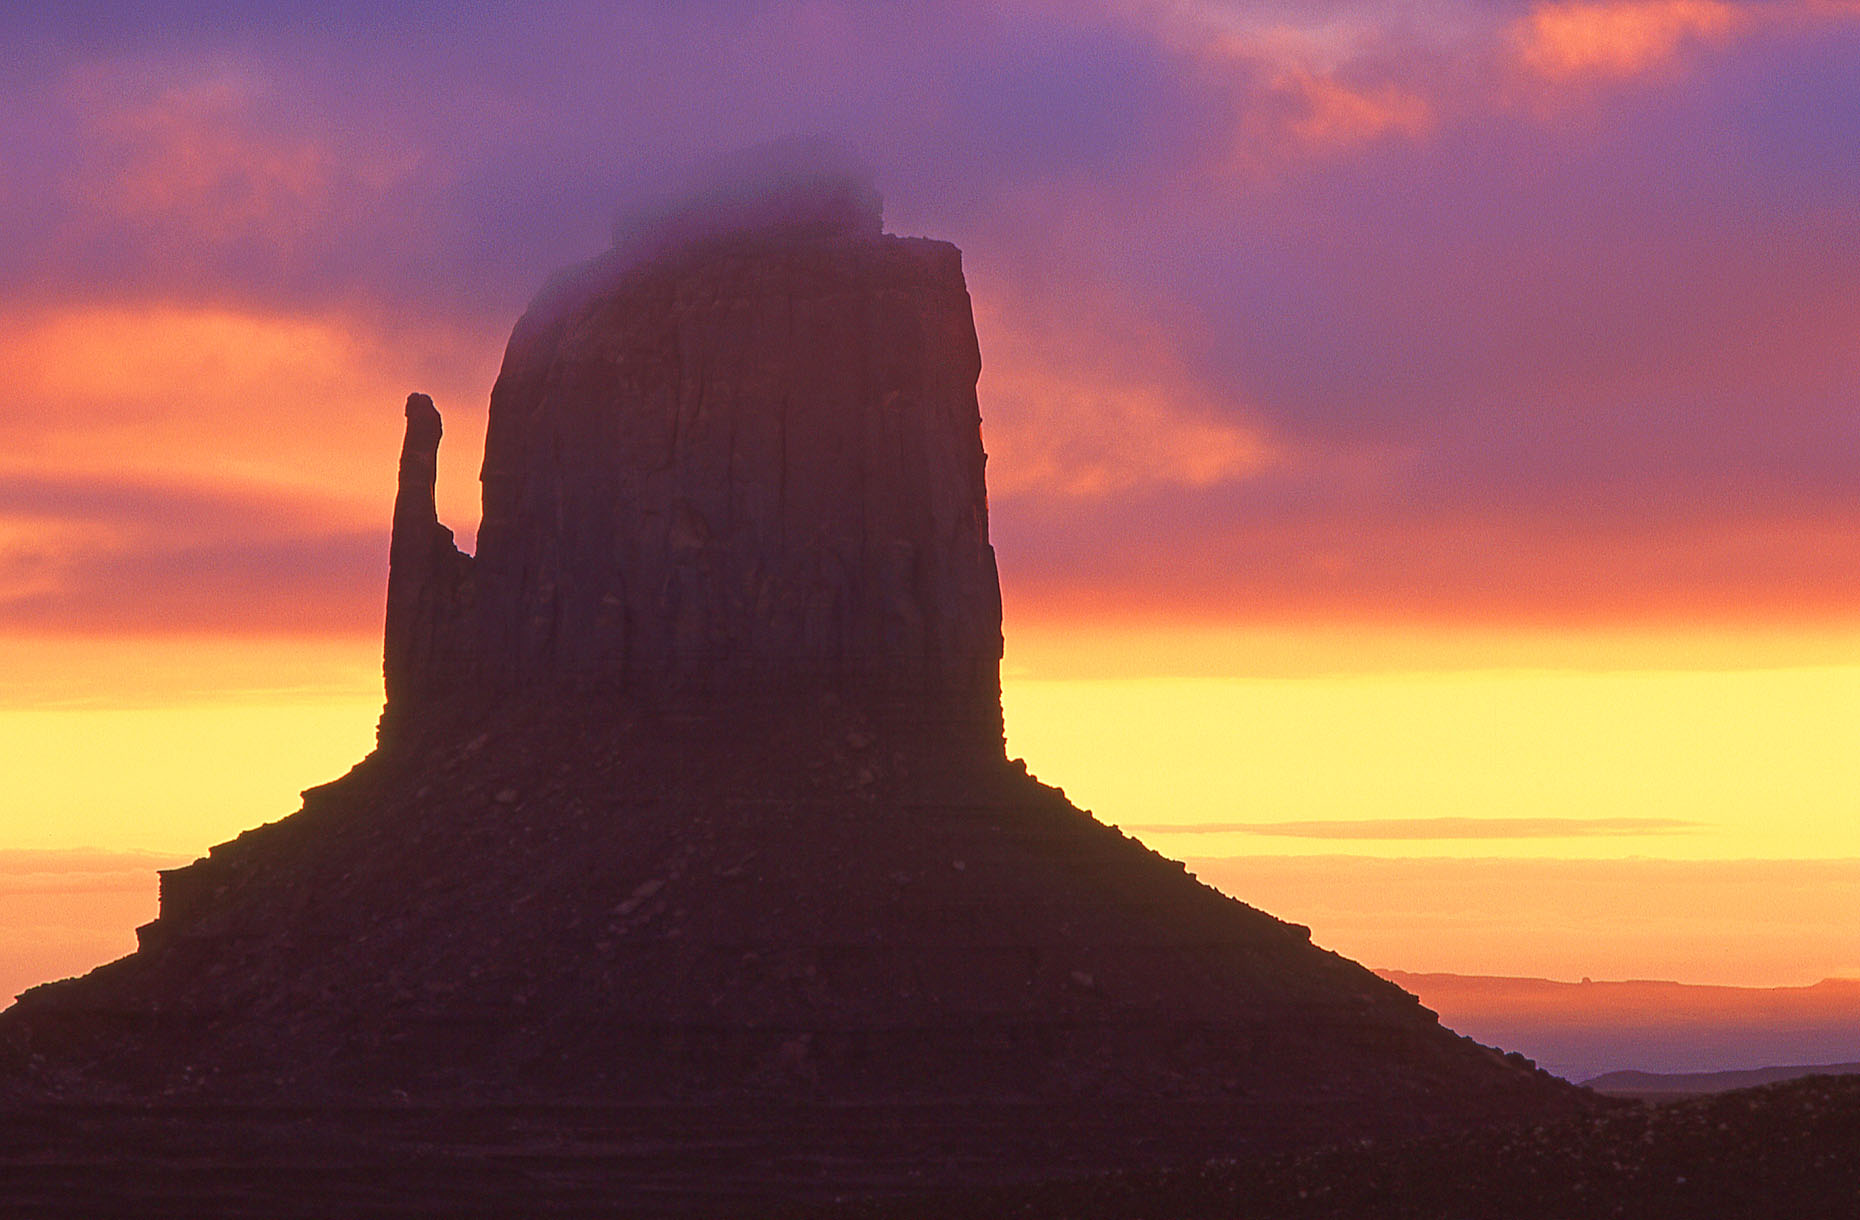 Dawn, East Mitten Butte, John Annerino, Monument Valley Navajo Tribal Park, Utah-Arizona